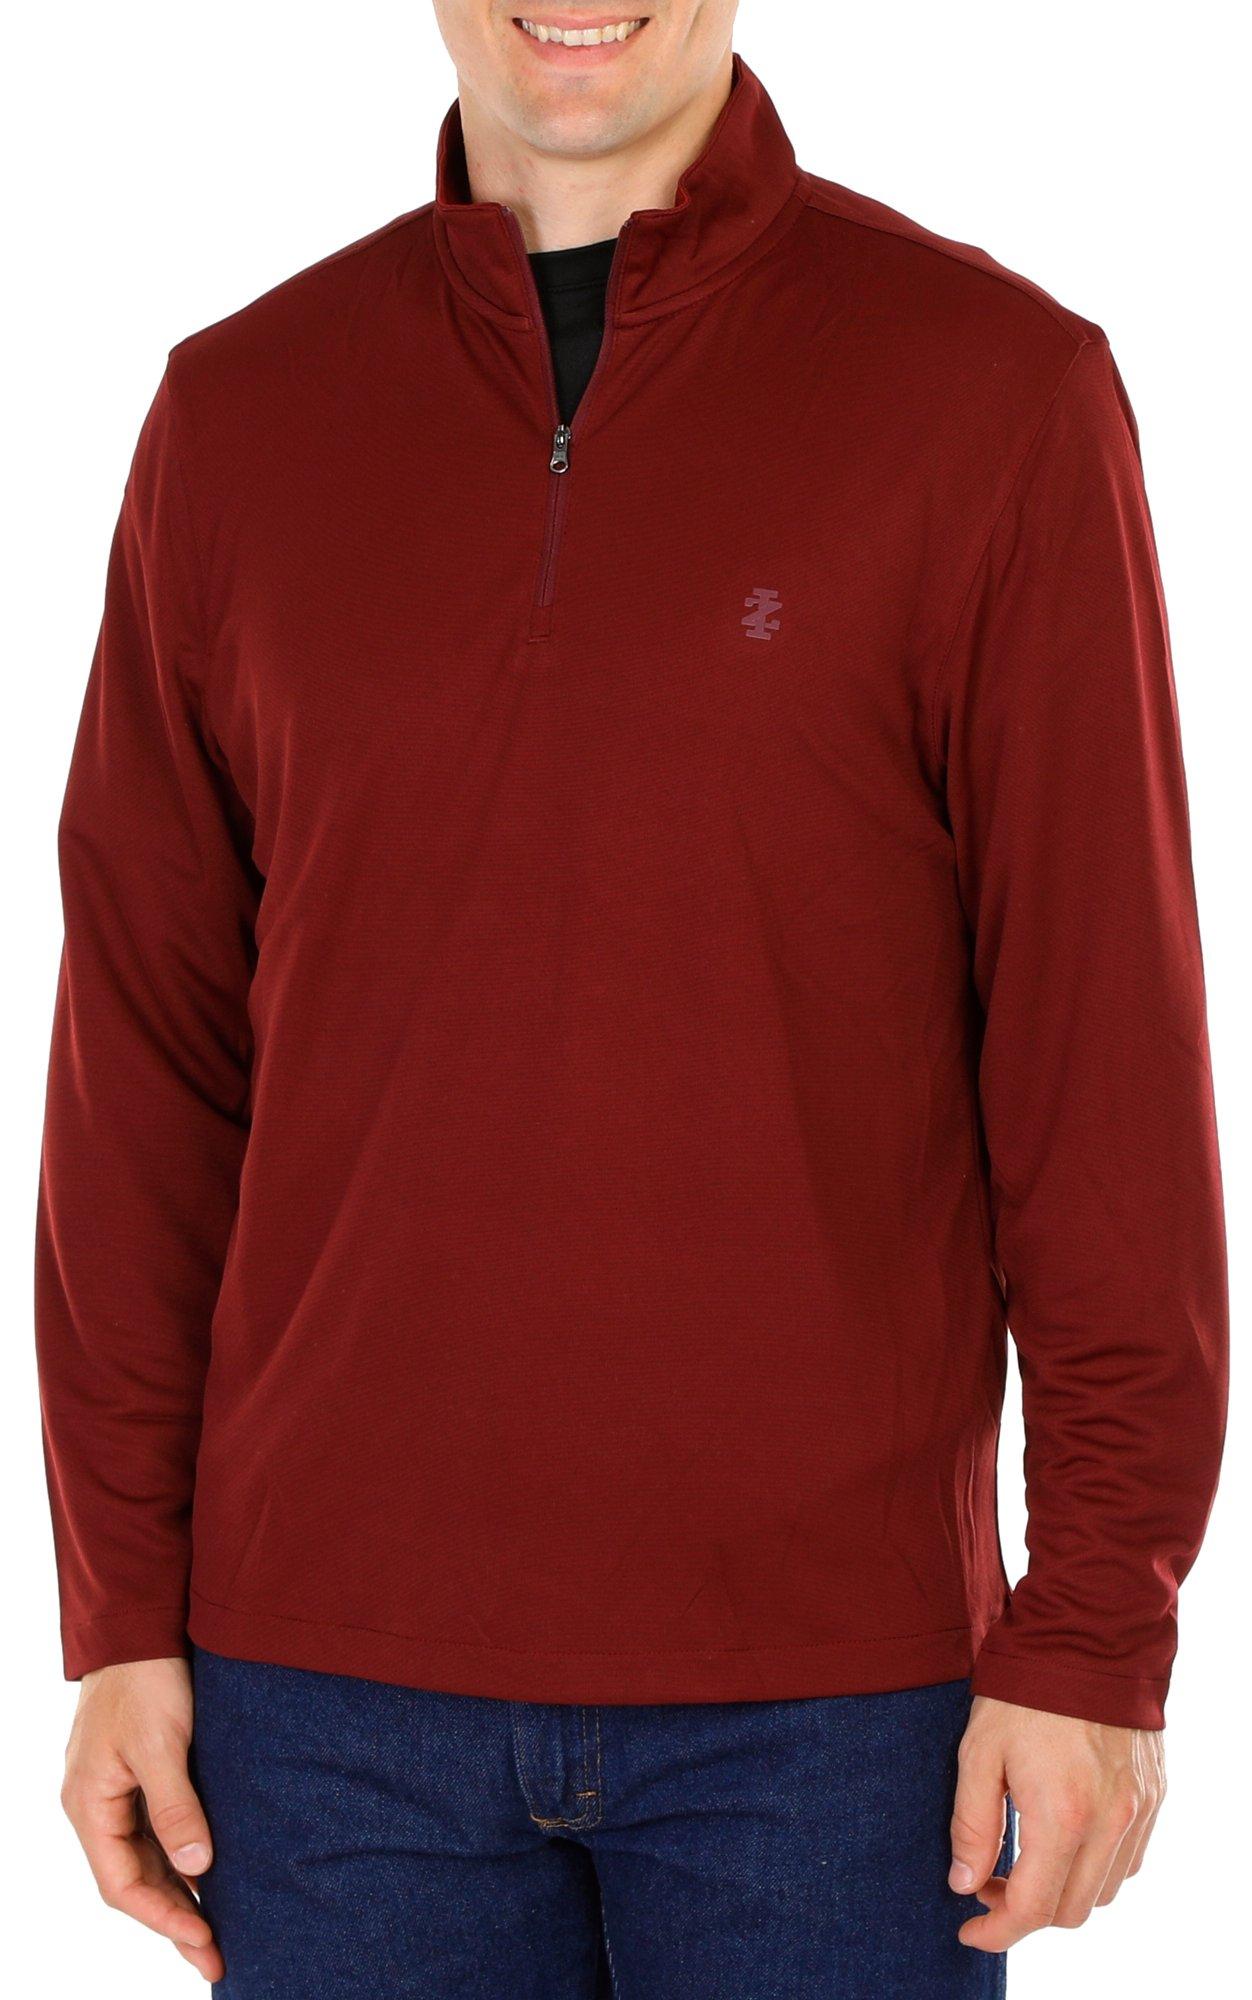 Men's Solid Long Sleeve Quarter Zip Shirt - Red